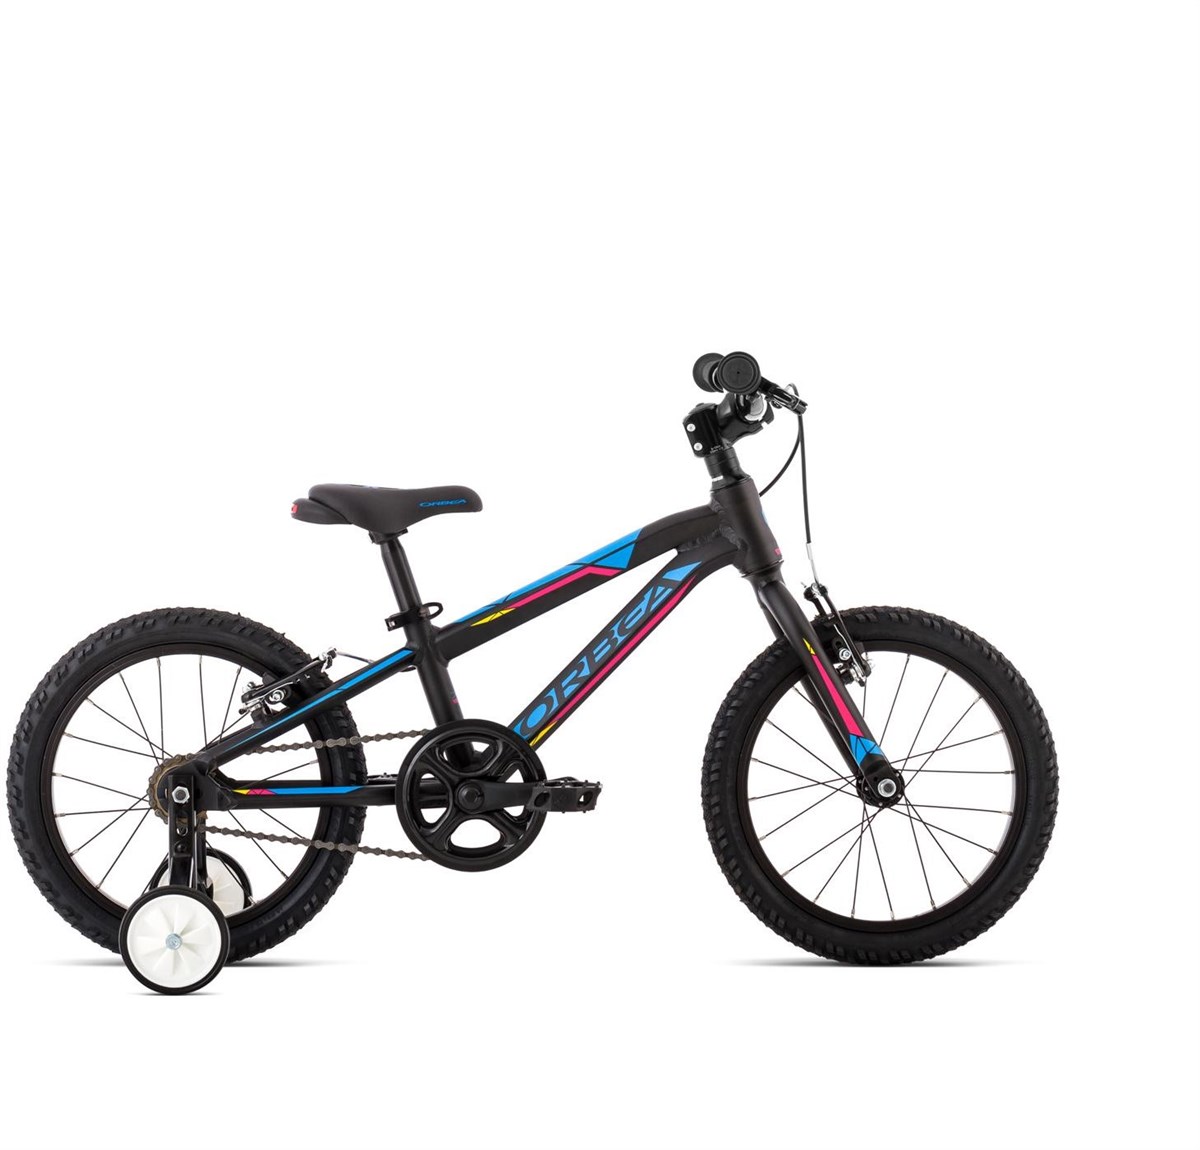 Orbea MX 16 16W Mountain Bike 2015 - Hardtail MTB product image